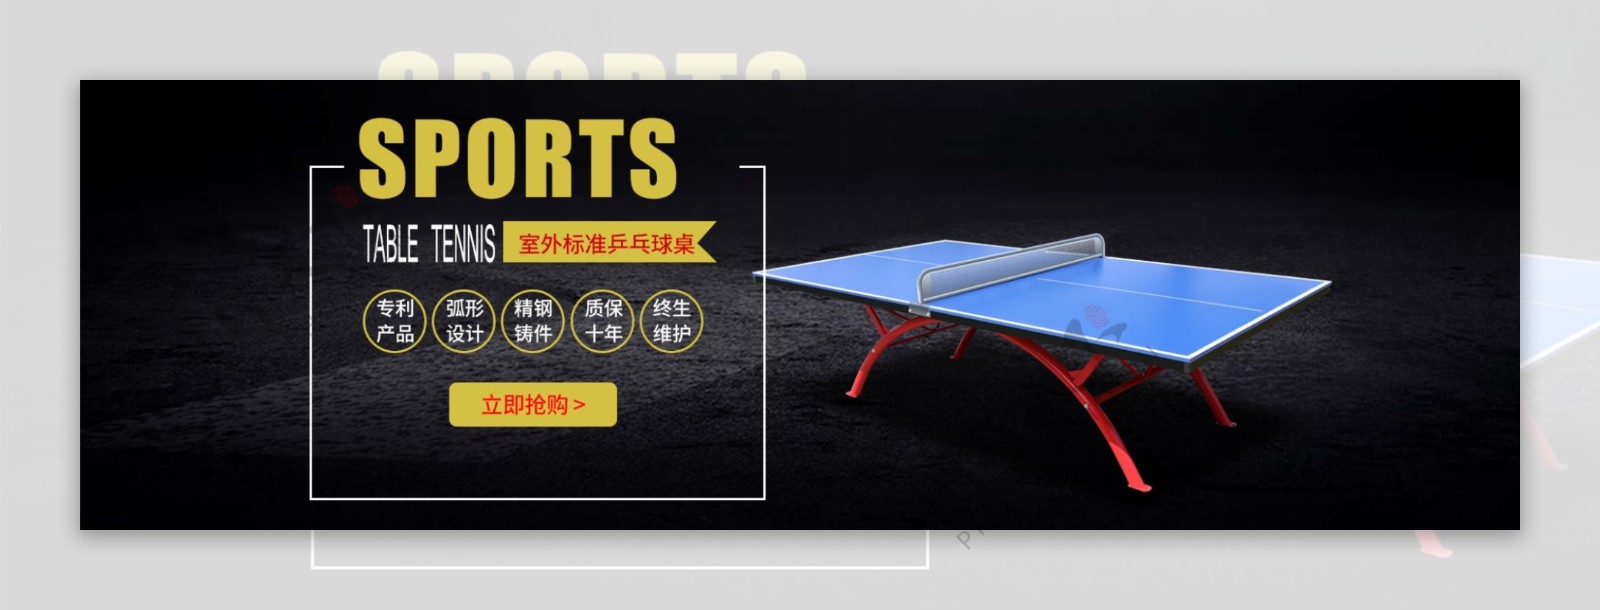 乒乓球桌淘宝banner